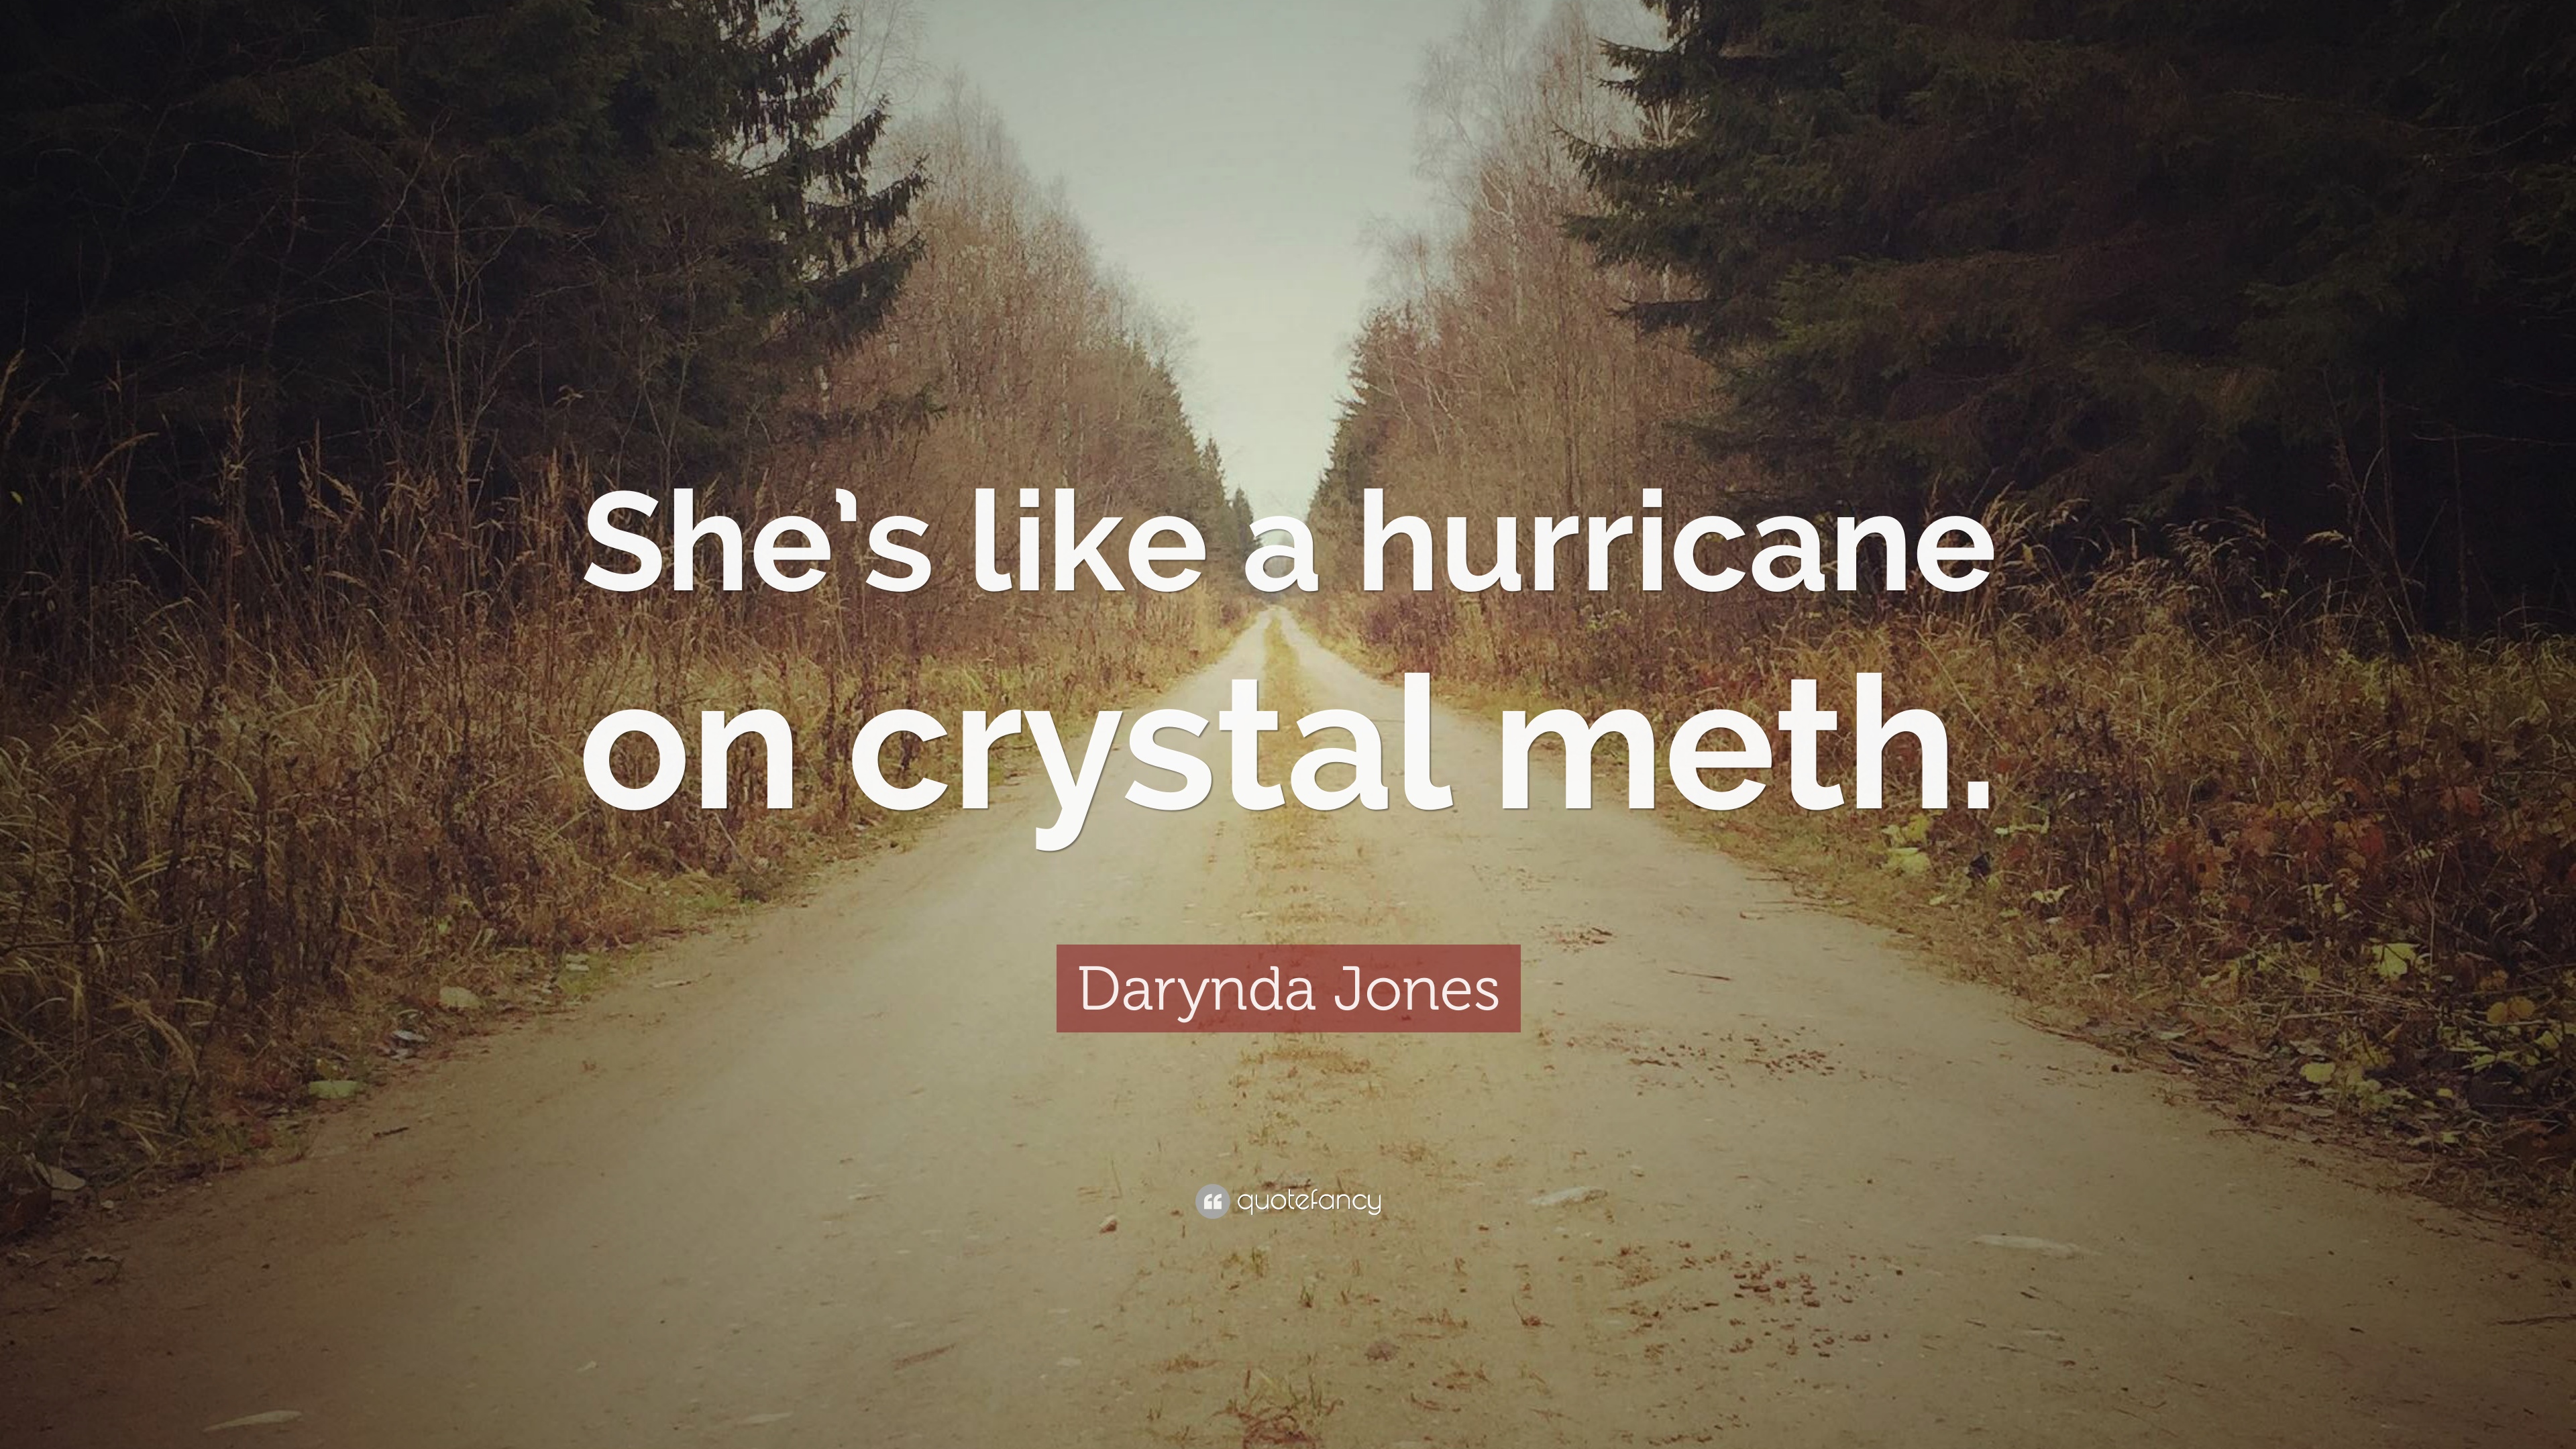 Darynda Jones Quote: “She's like a hurricane on crystal meth